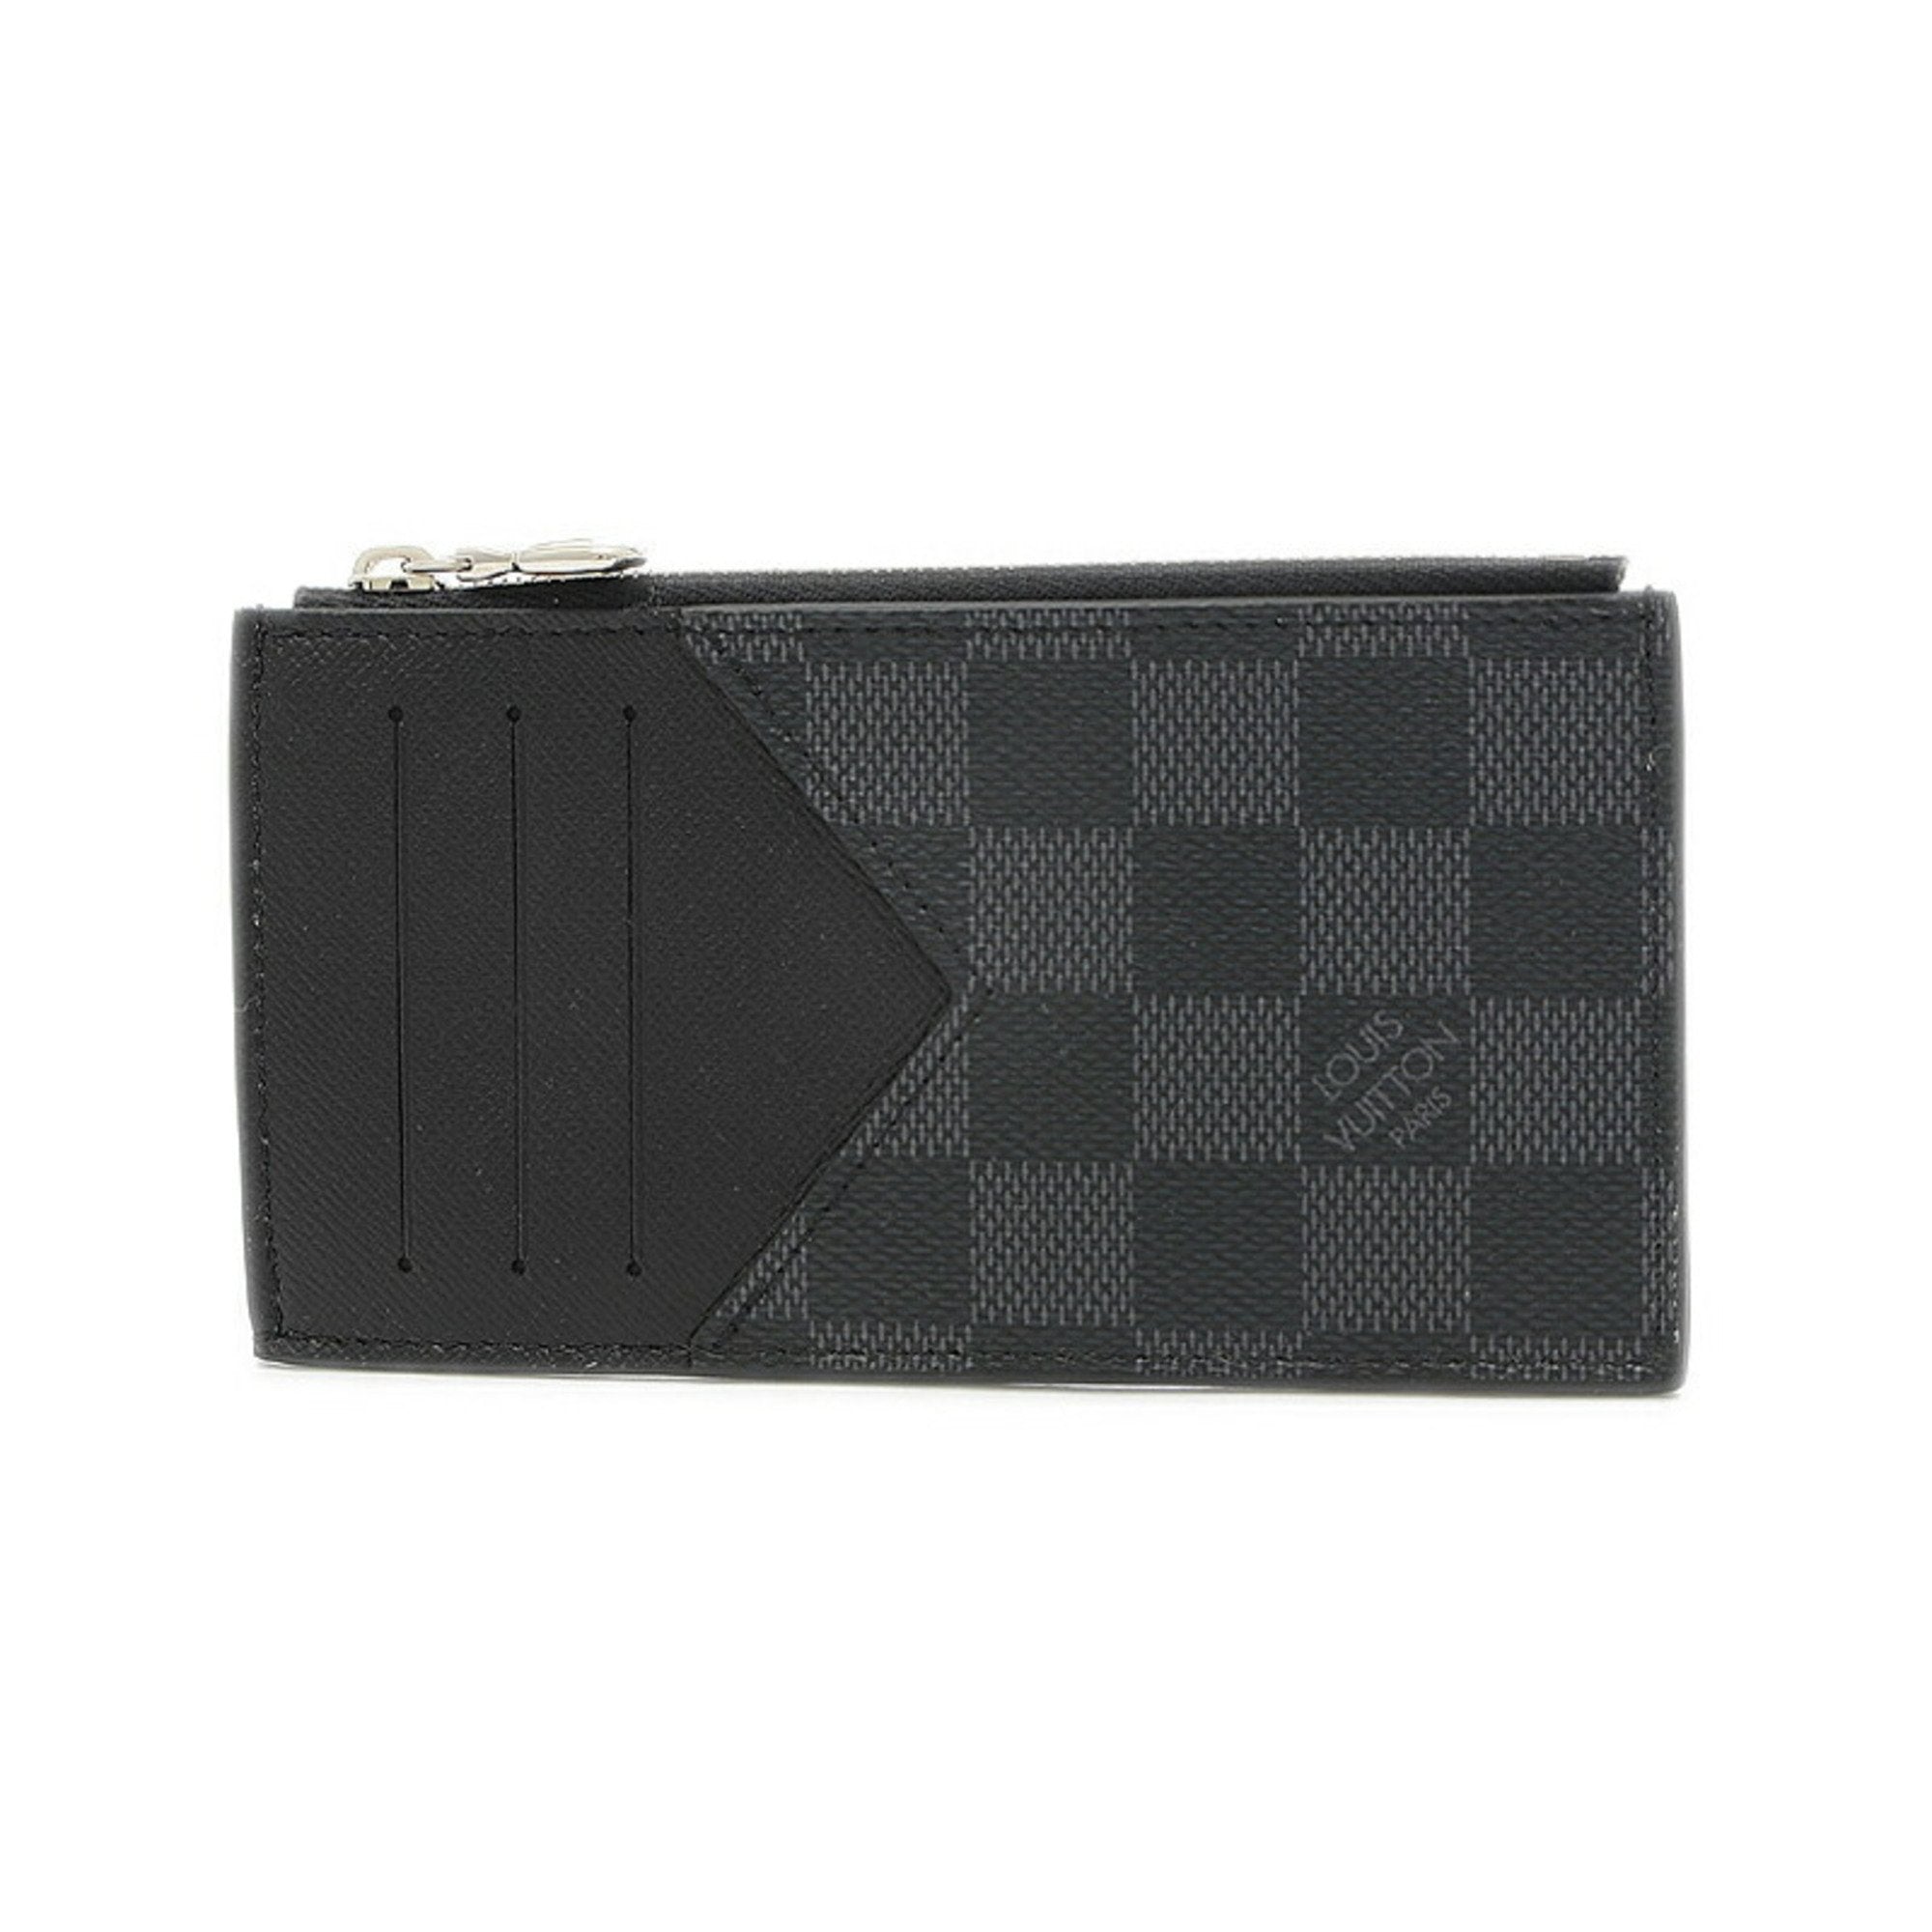 Shop Louis Vuitton N64038 COIN CARD HOLDER (N64038) by pinkwordhouse